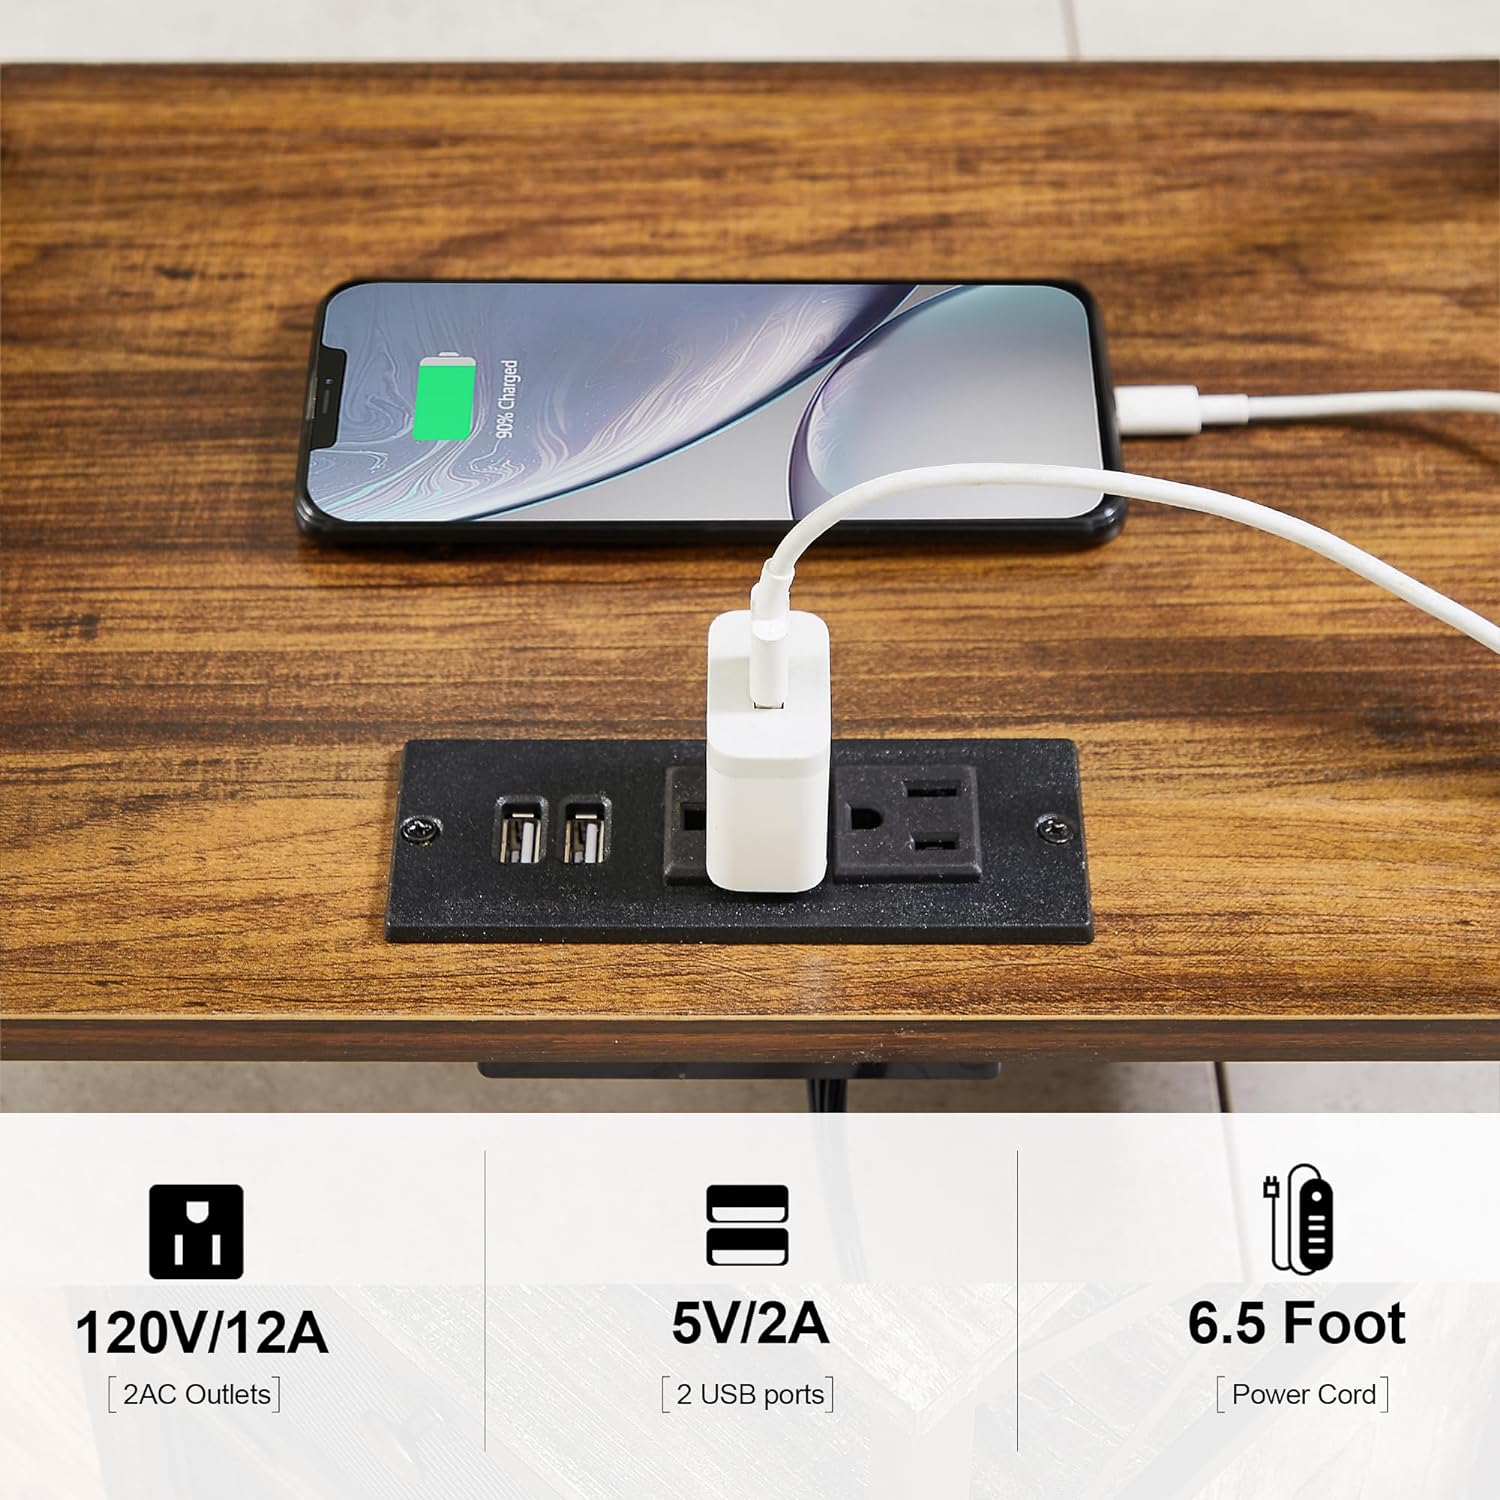 VECELO Modern Bedside End Tables with Charging Station & USB Ports, 1 Pack/2 Packs